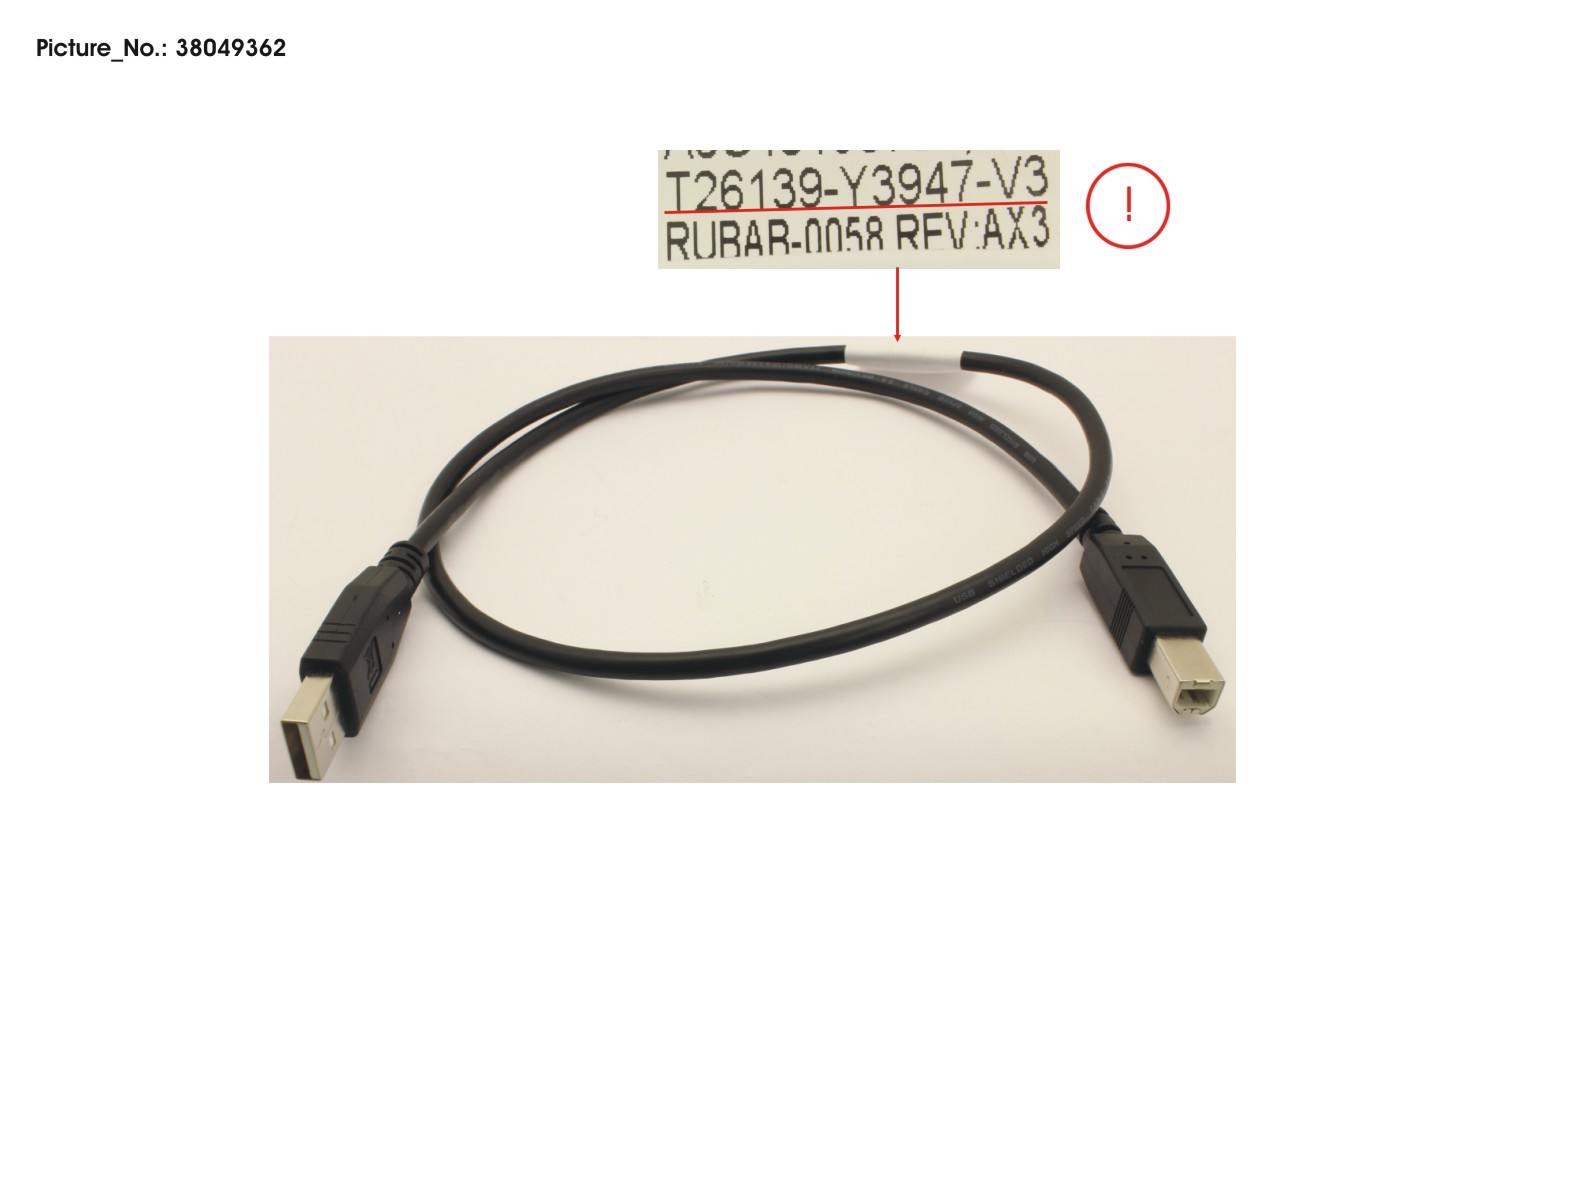 CABLE USB A - USB B 600